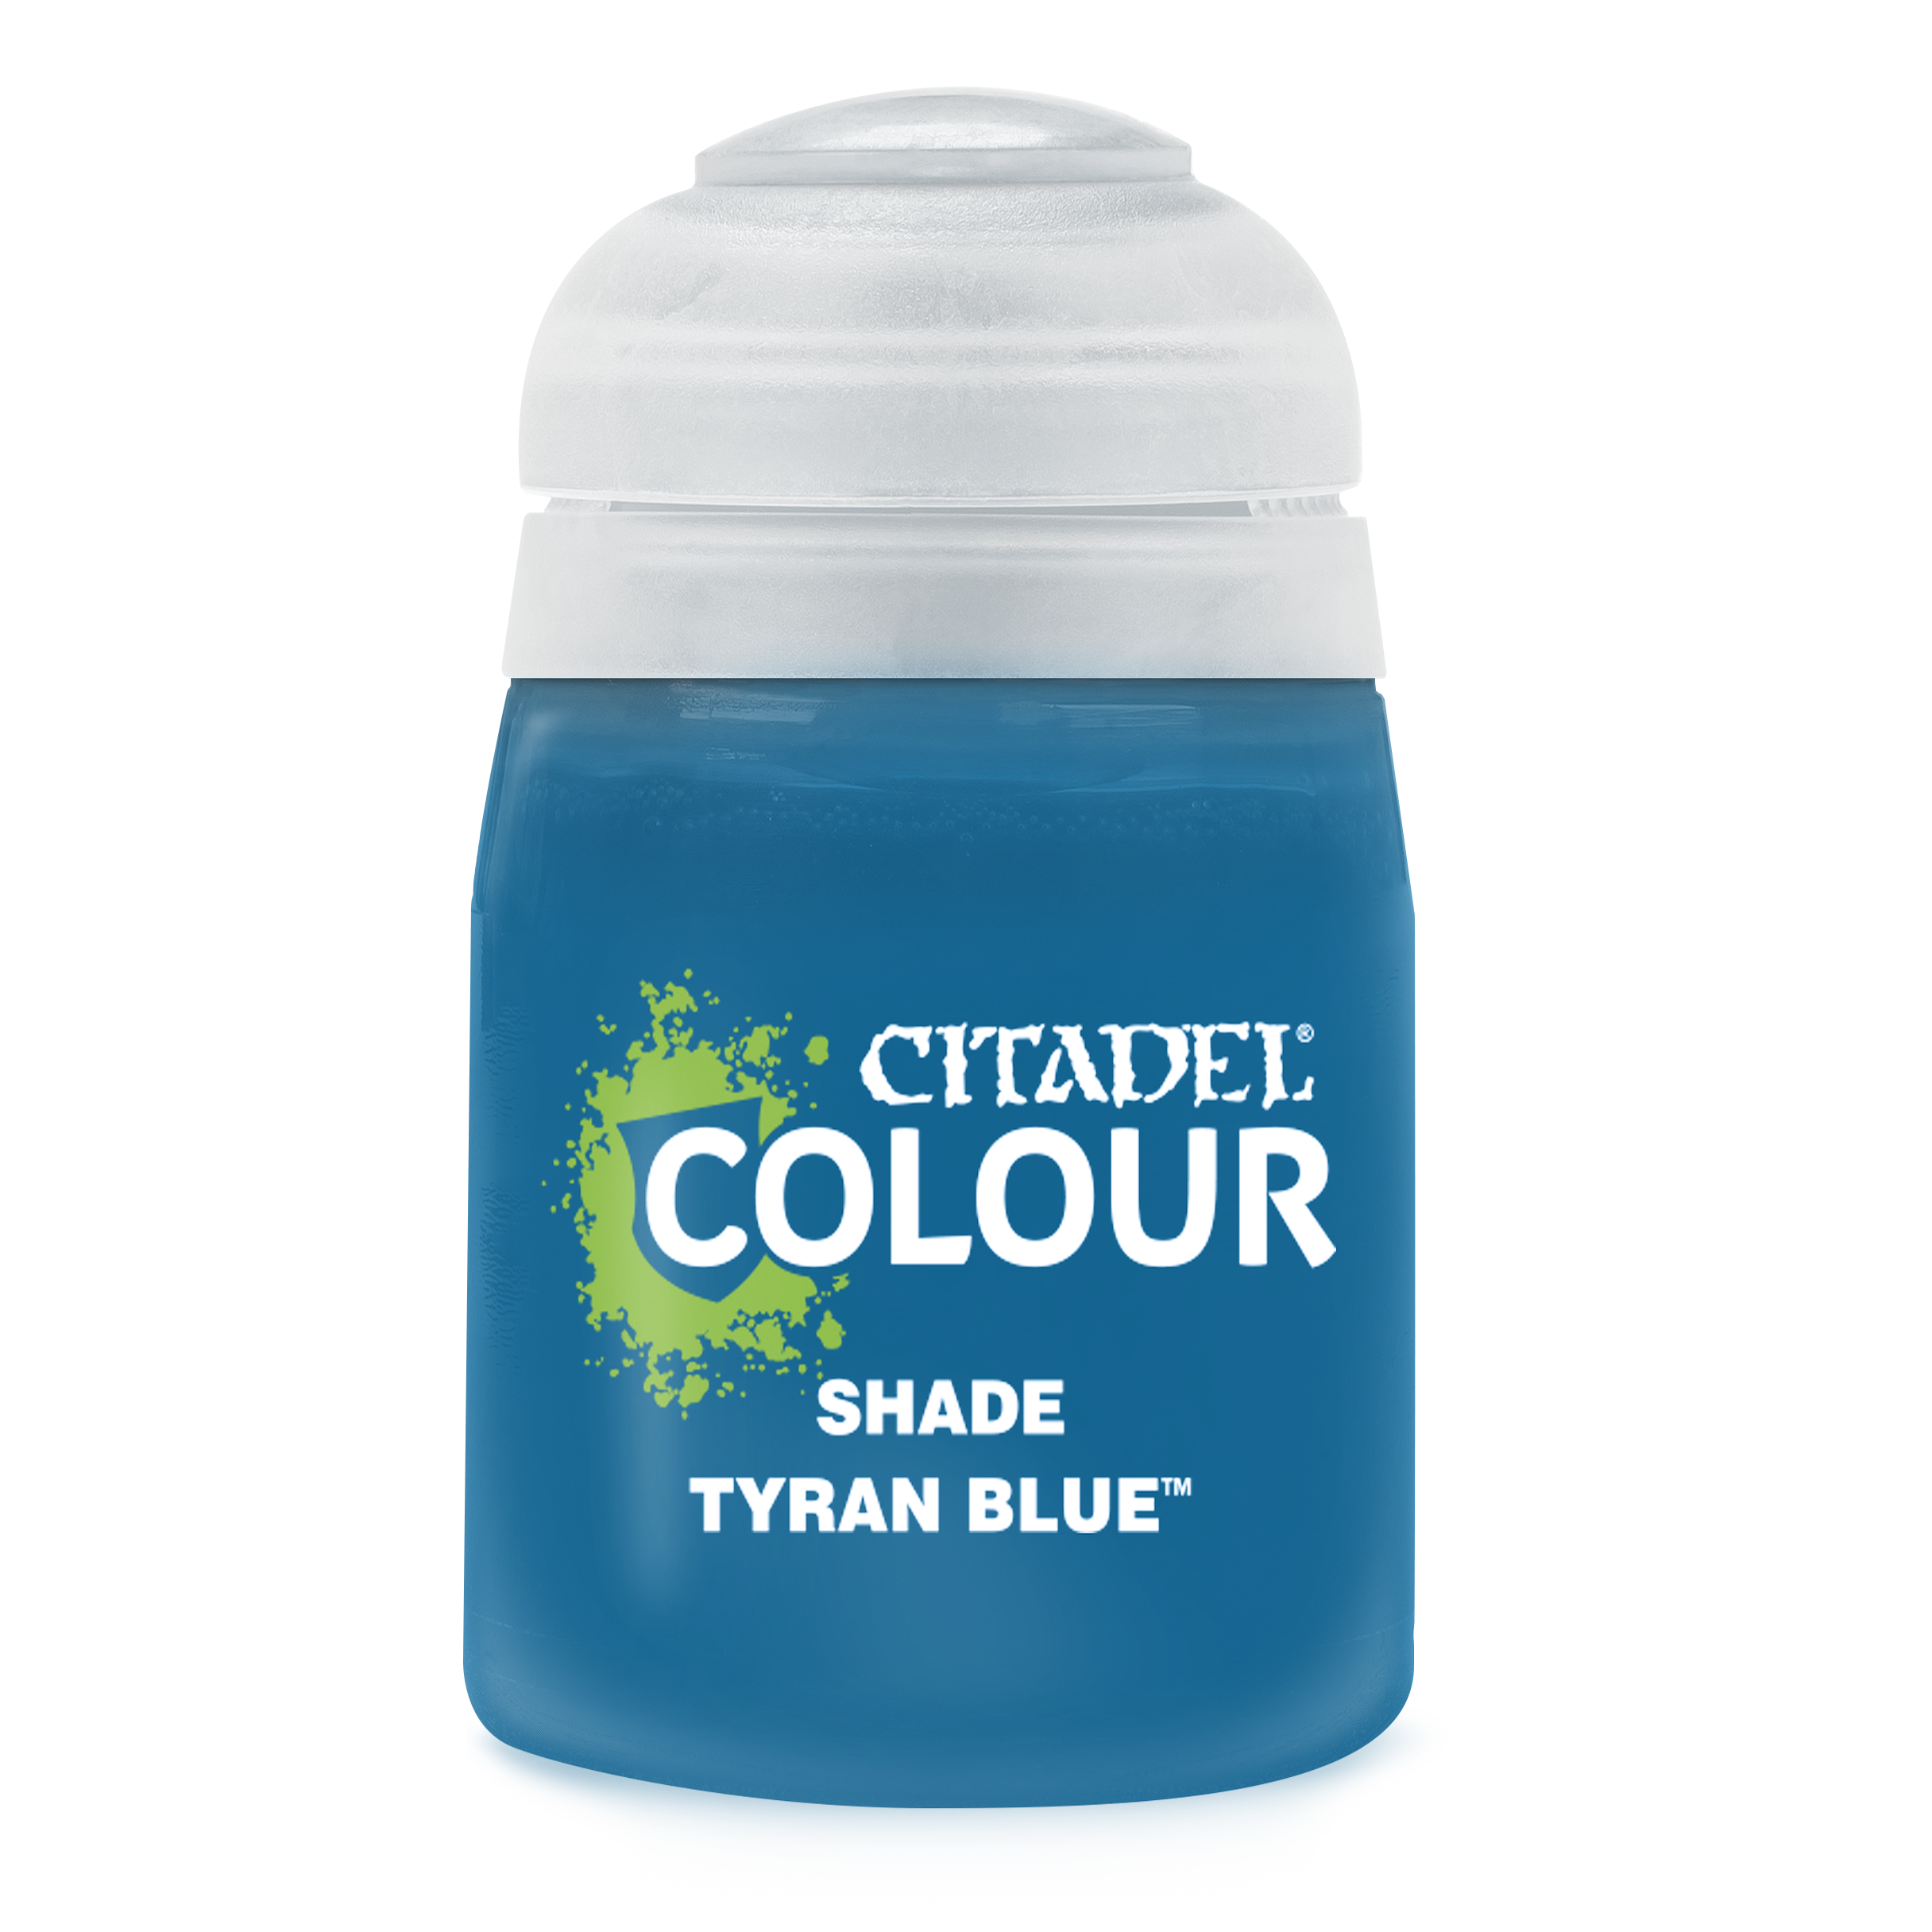 Tyran Blue Citadel Shade Paint | Lots Moore NSW